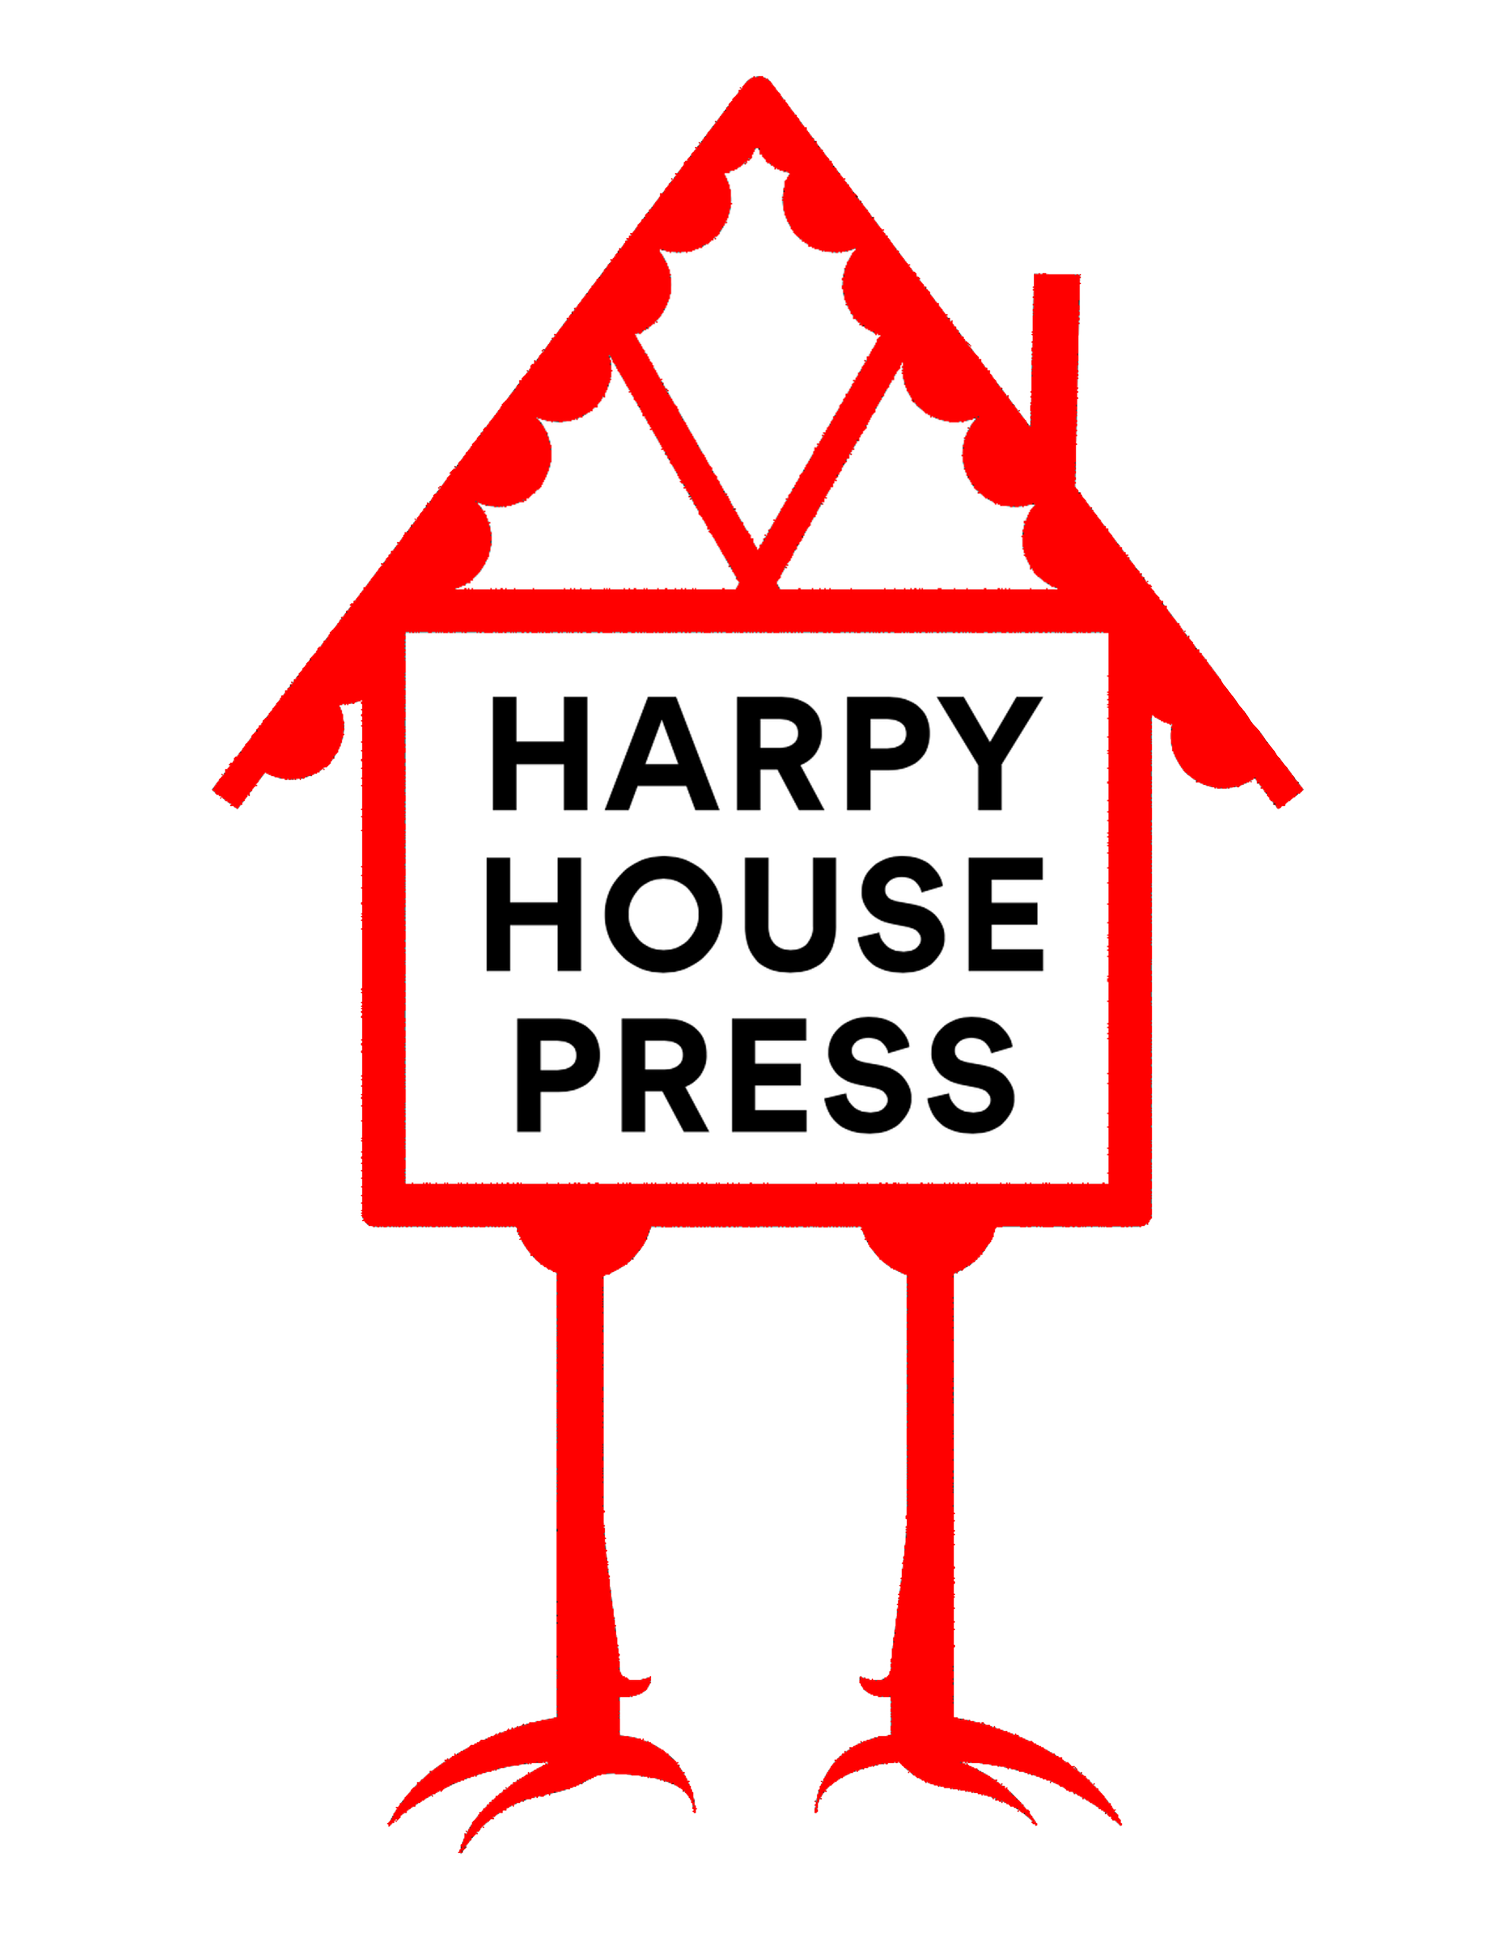 Harpy House Press